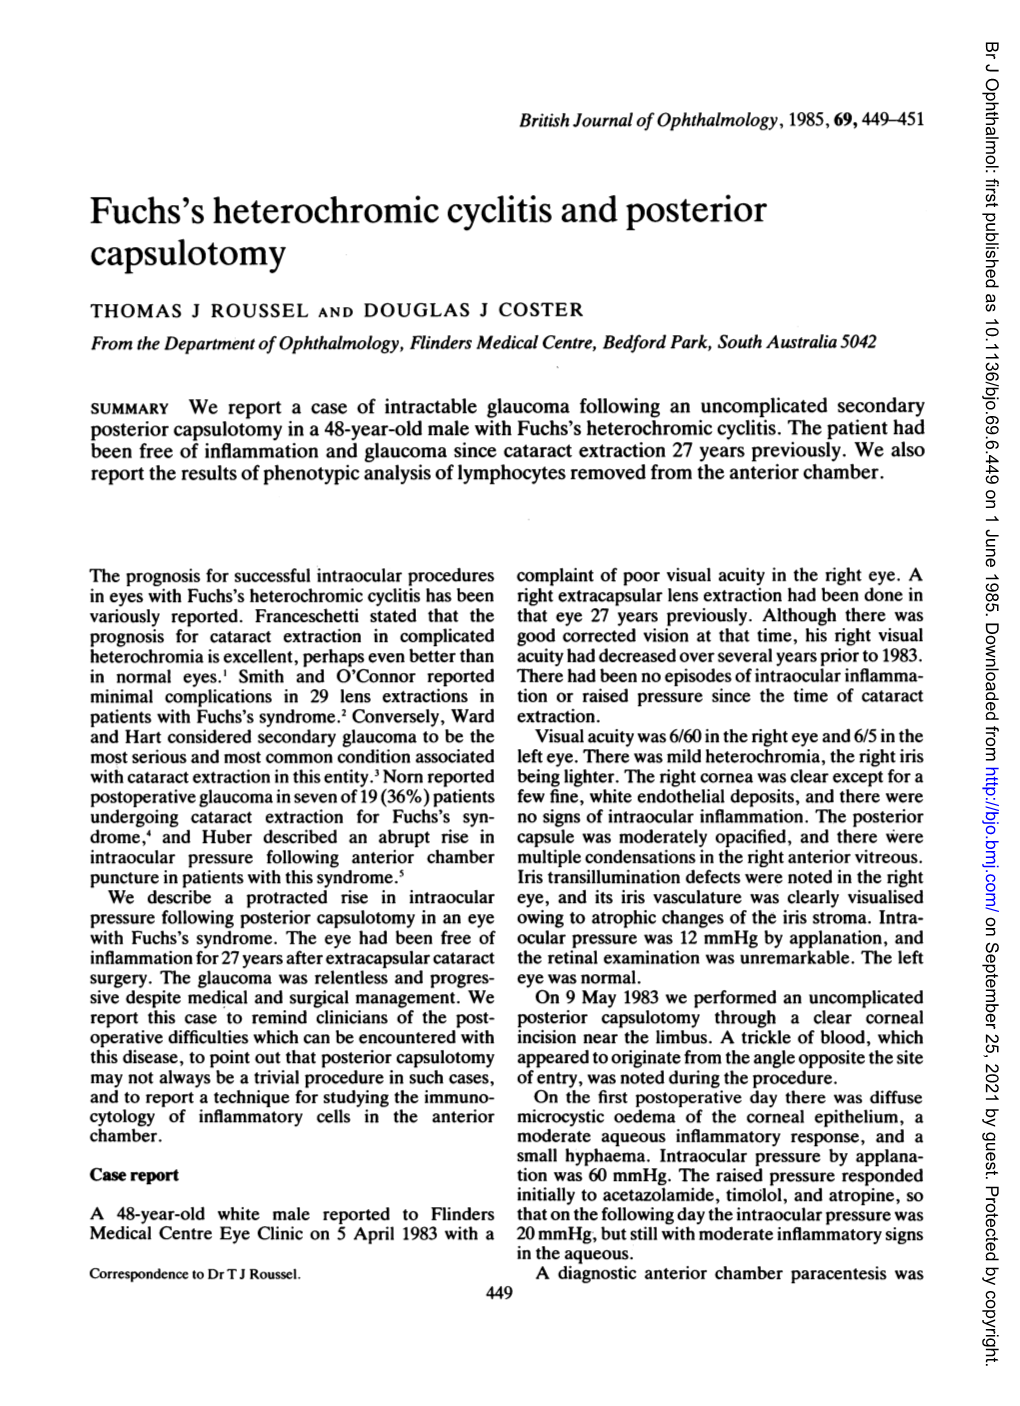 Fuchs's Heterochromic Cyclitis and Posterior Capsulotomy